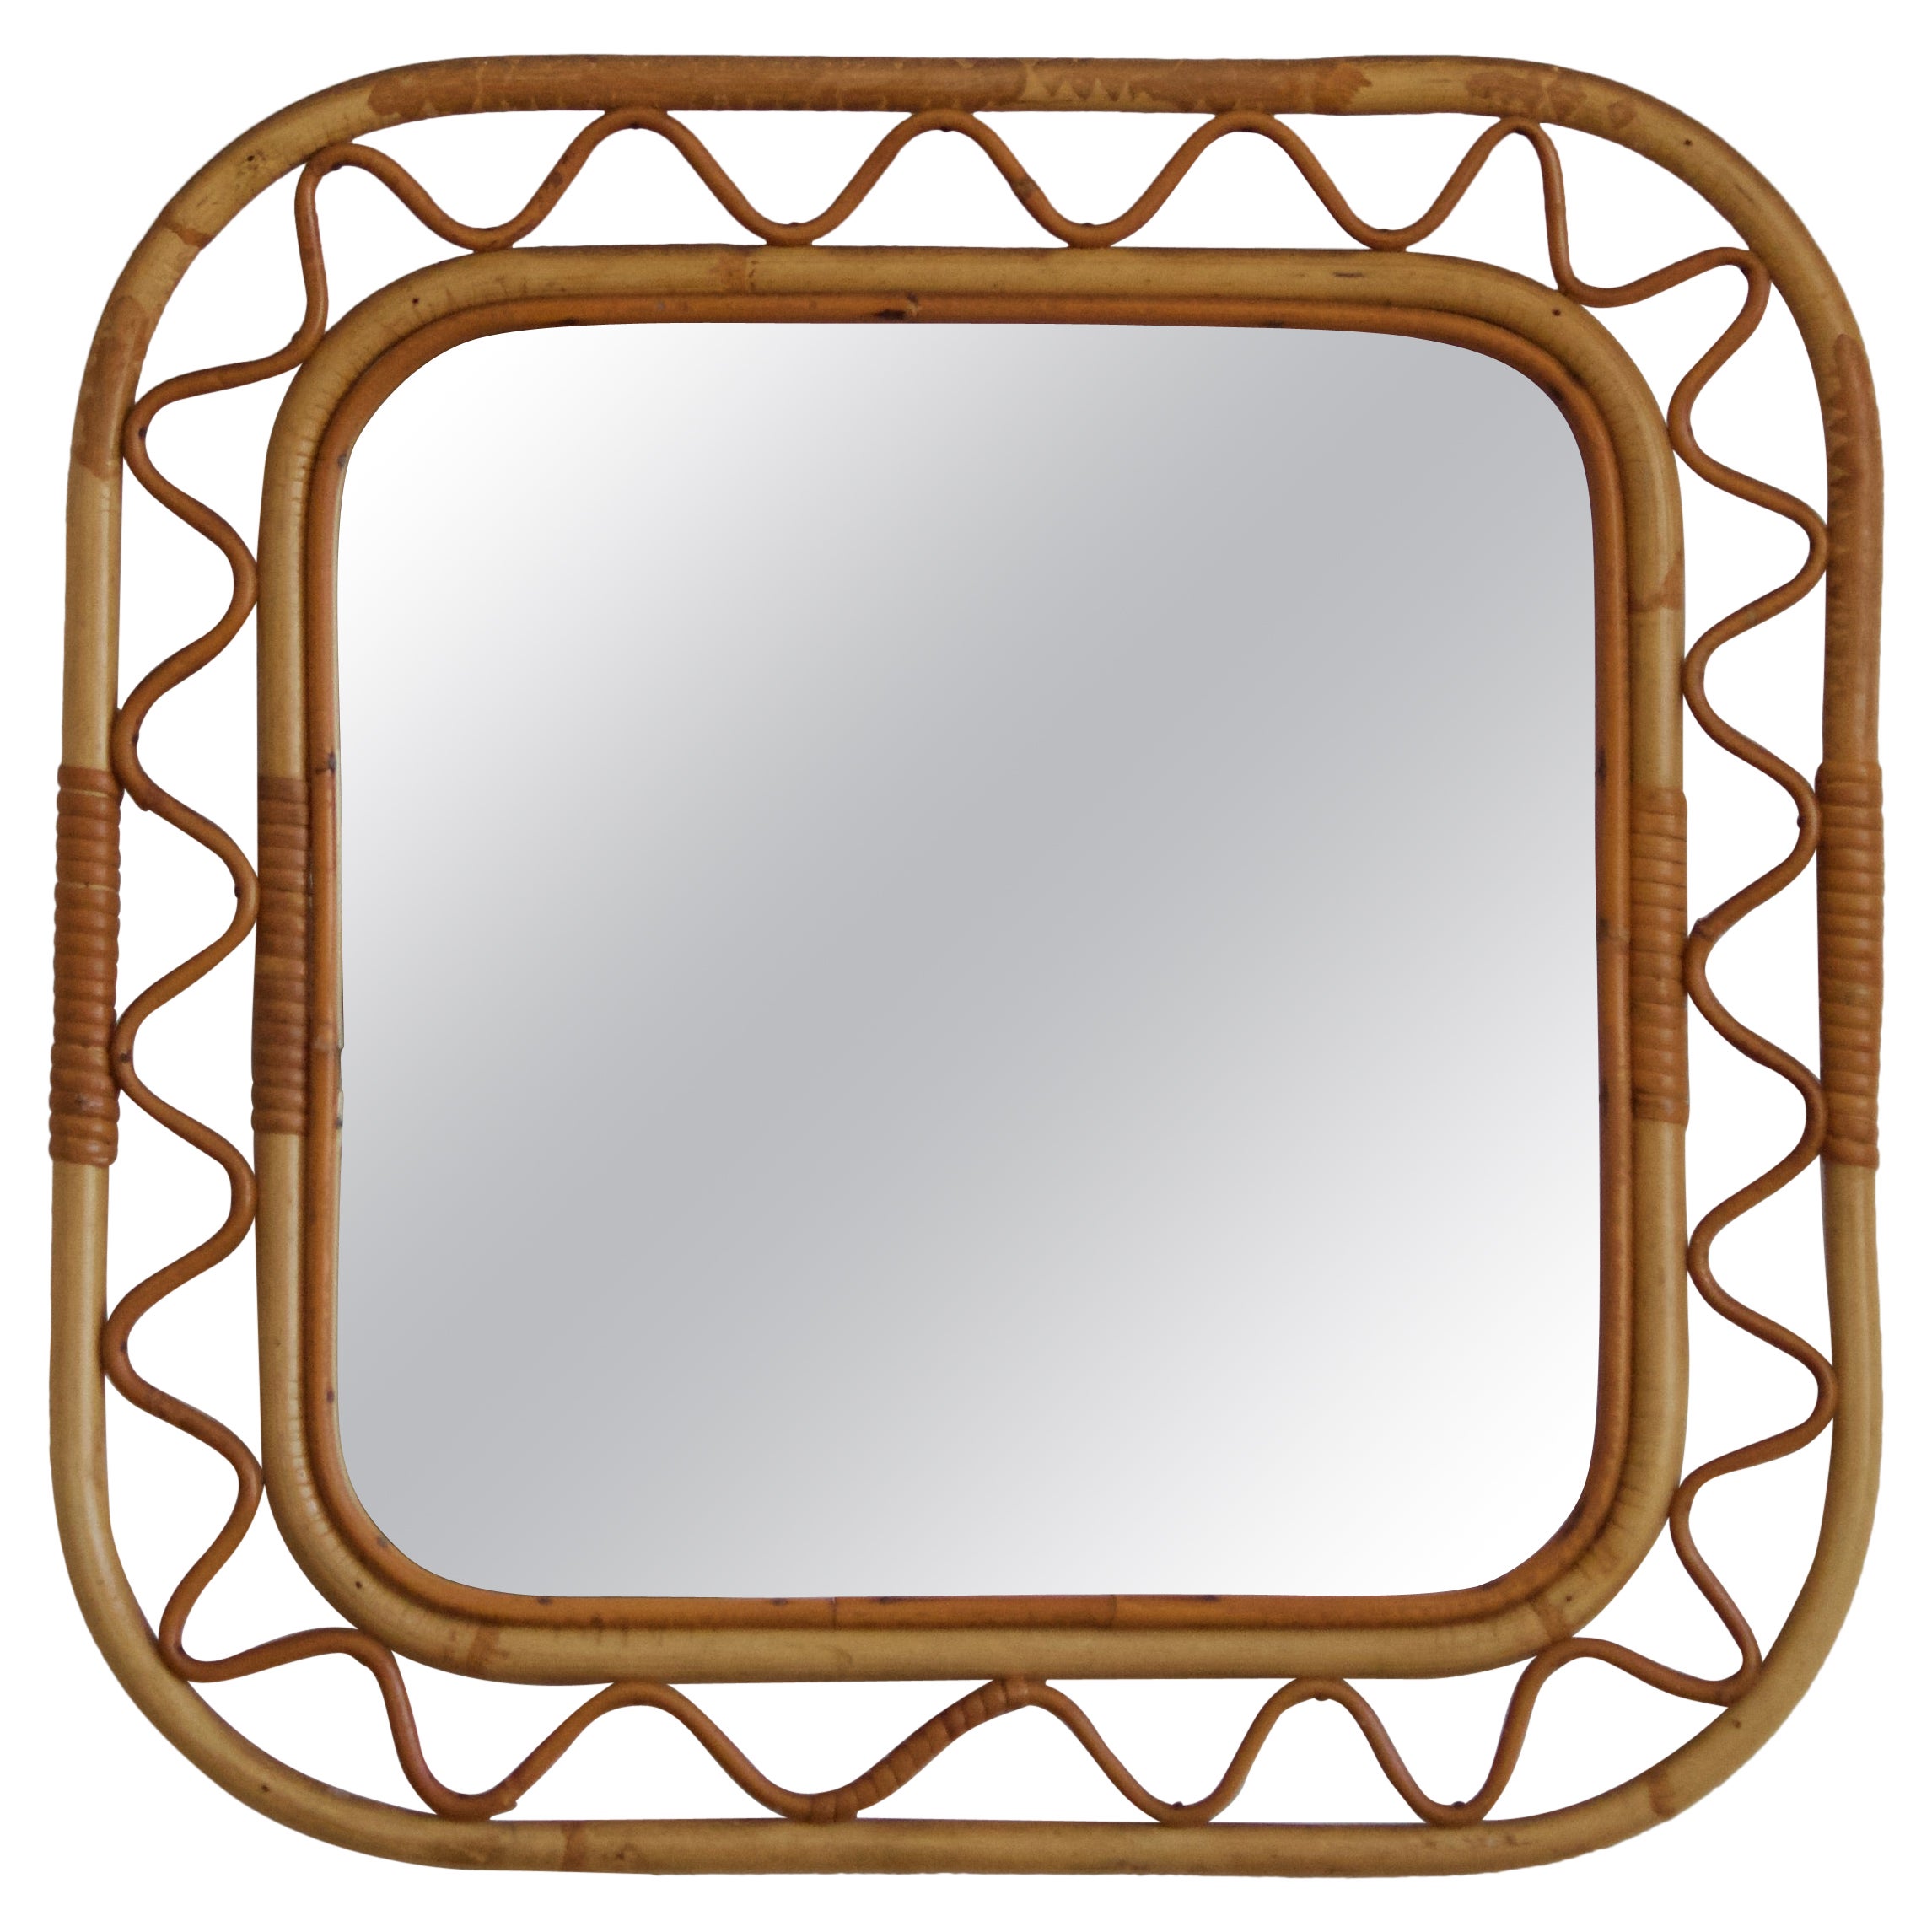 Swedish, Organic Wall Mirror, Woven Wicker, Bambo, Glass, Sweden, 1950s